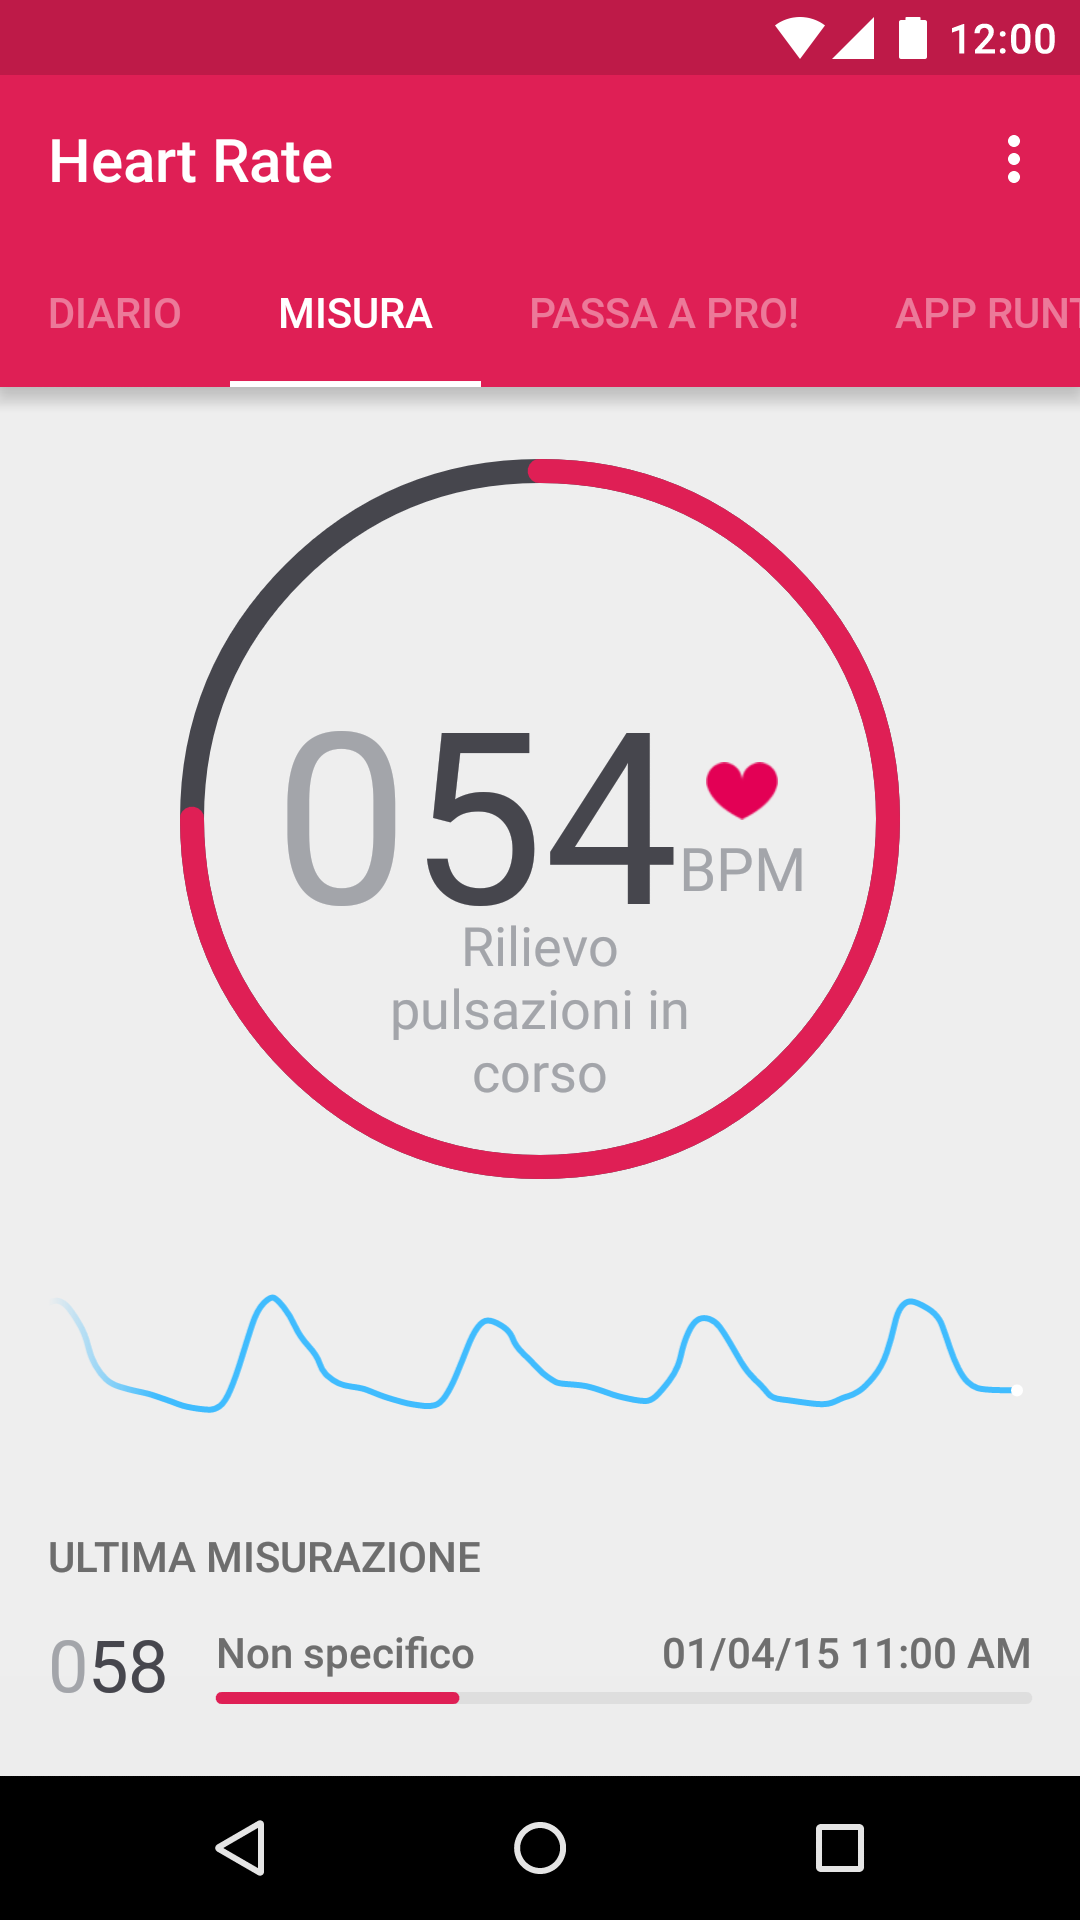 Android application Runtastic Heart Rate Monitor screenshort